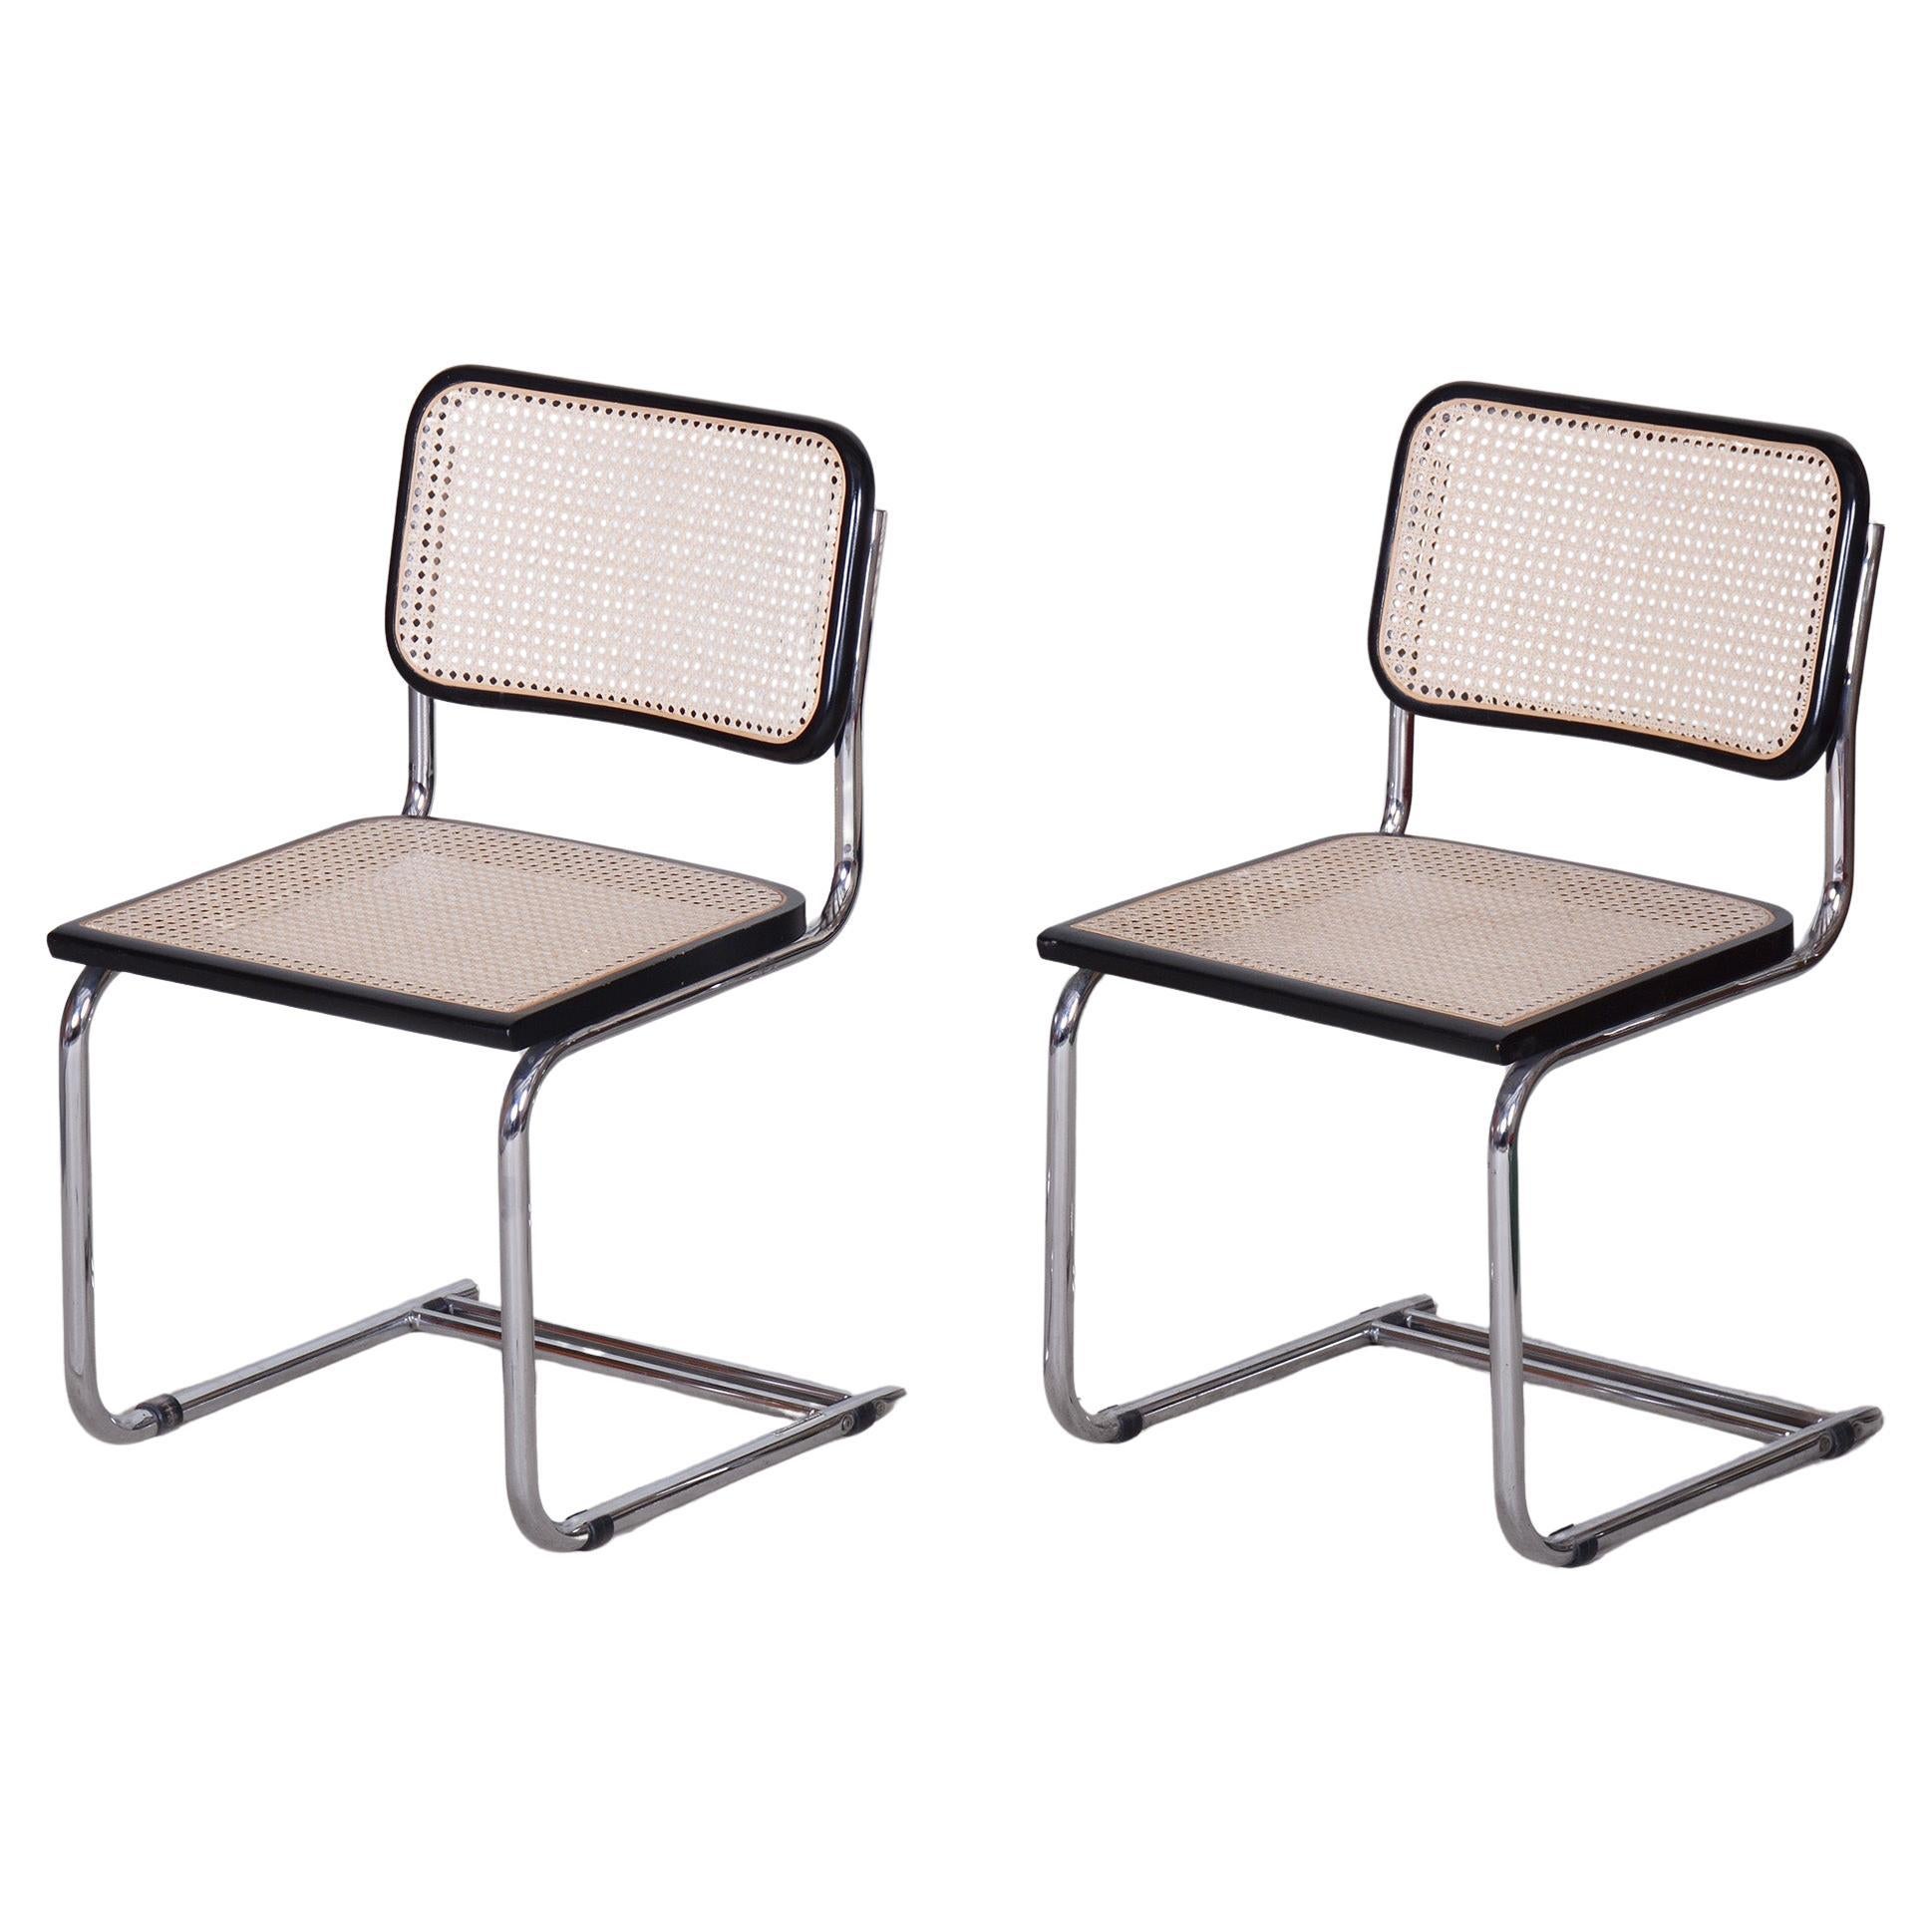 Original Pair of Bauhaus Chairs, Chrome-Plated Steel, Rattan Beech, 1960s, Italy